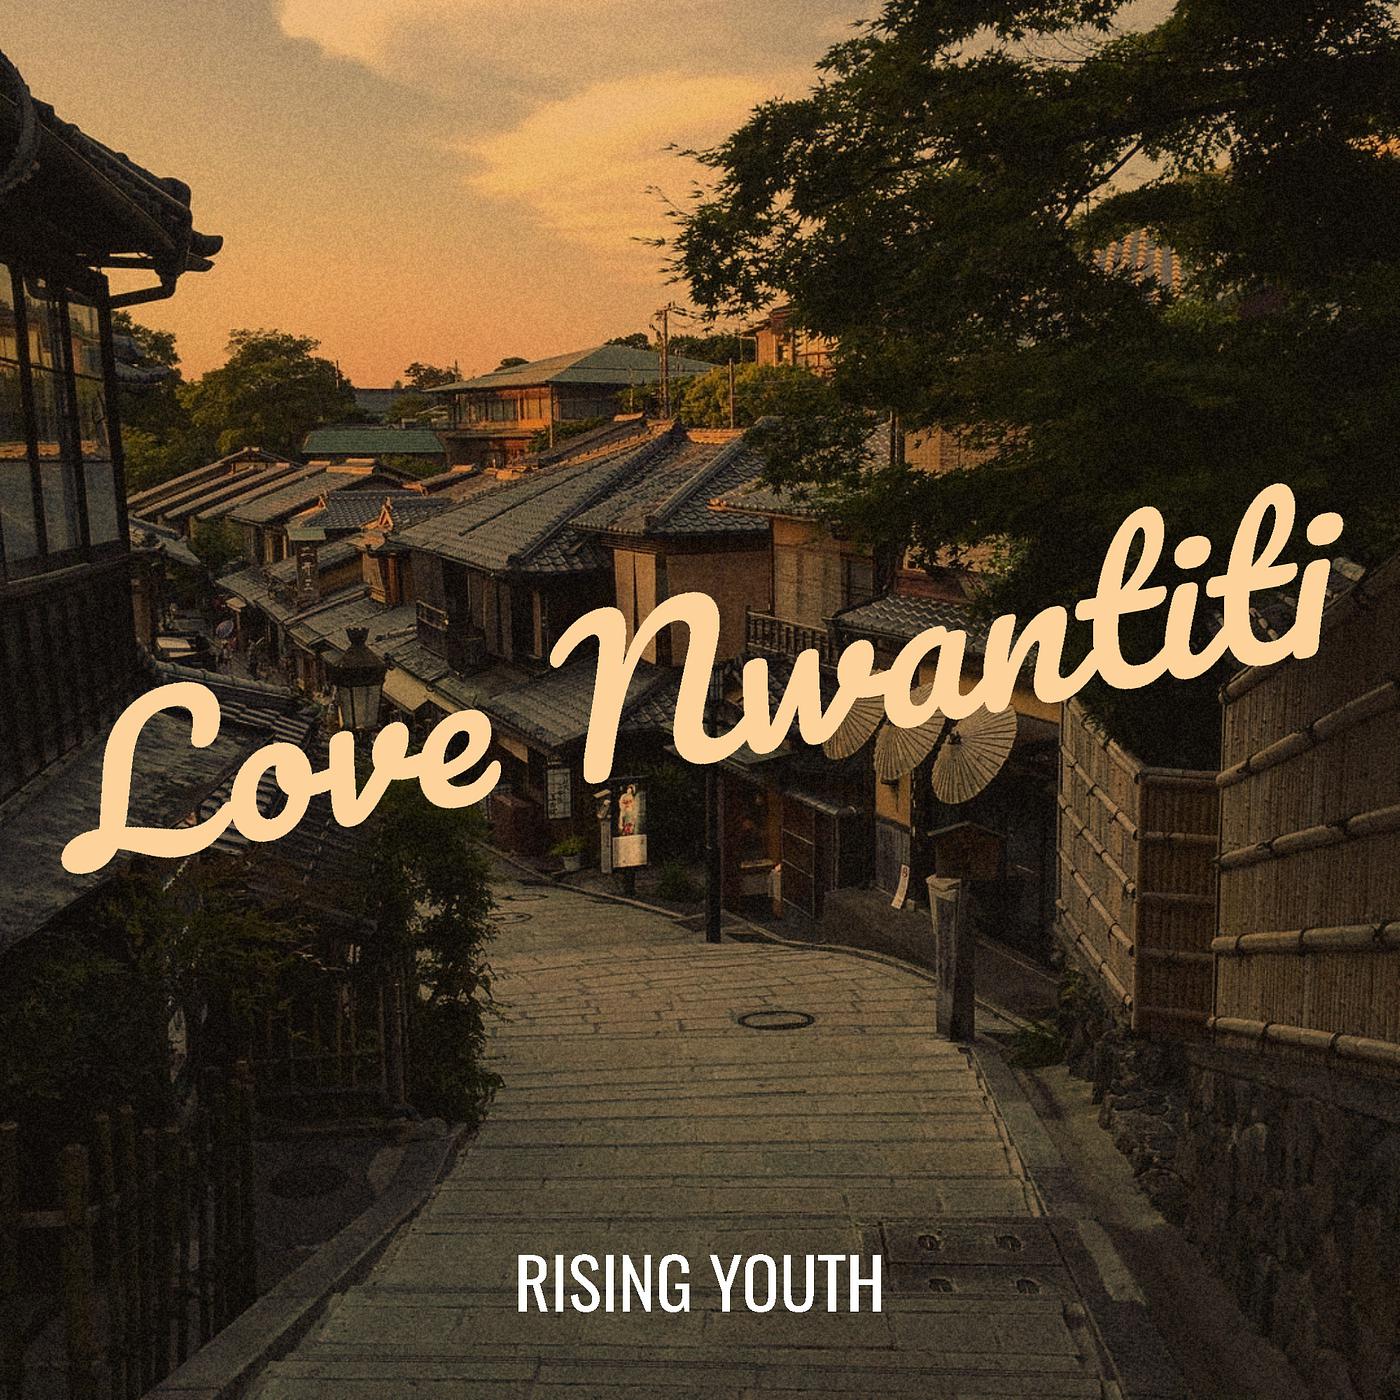 Постер альбома Love Nwantiti